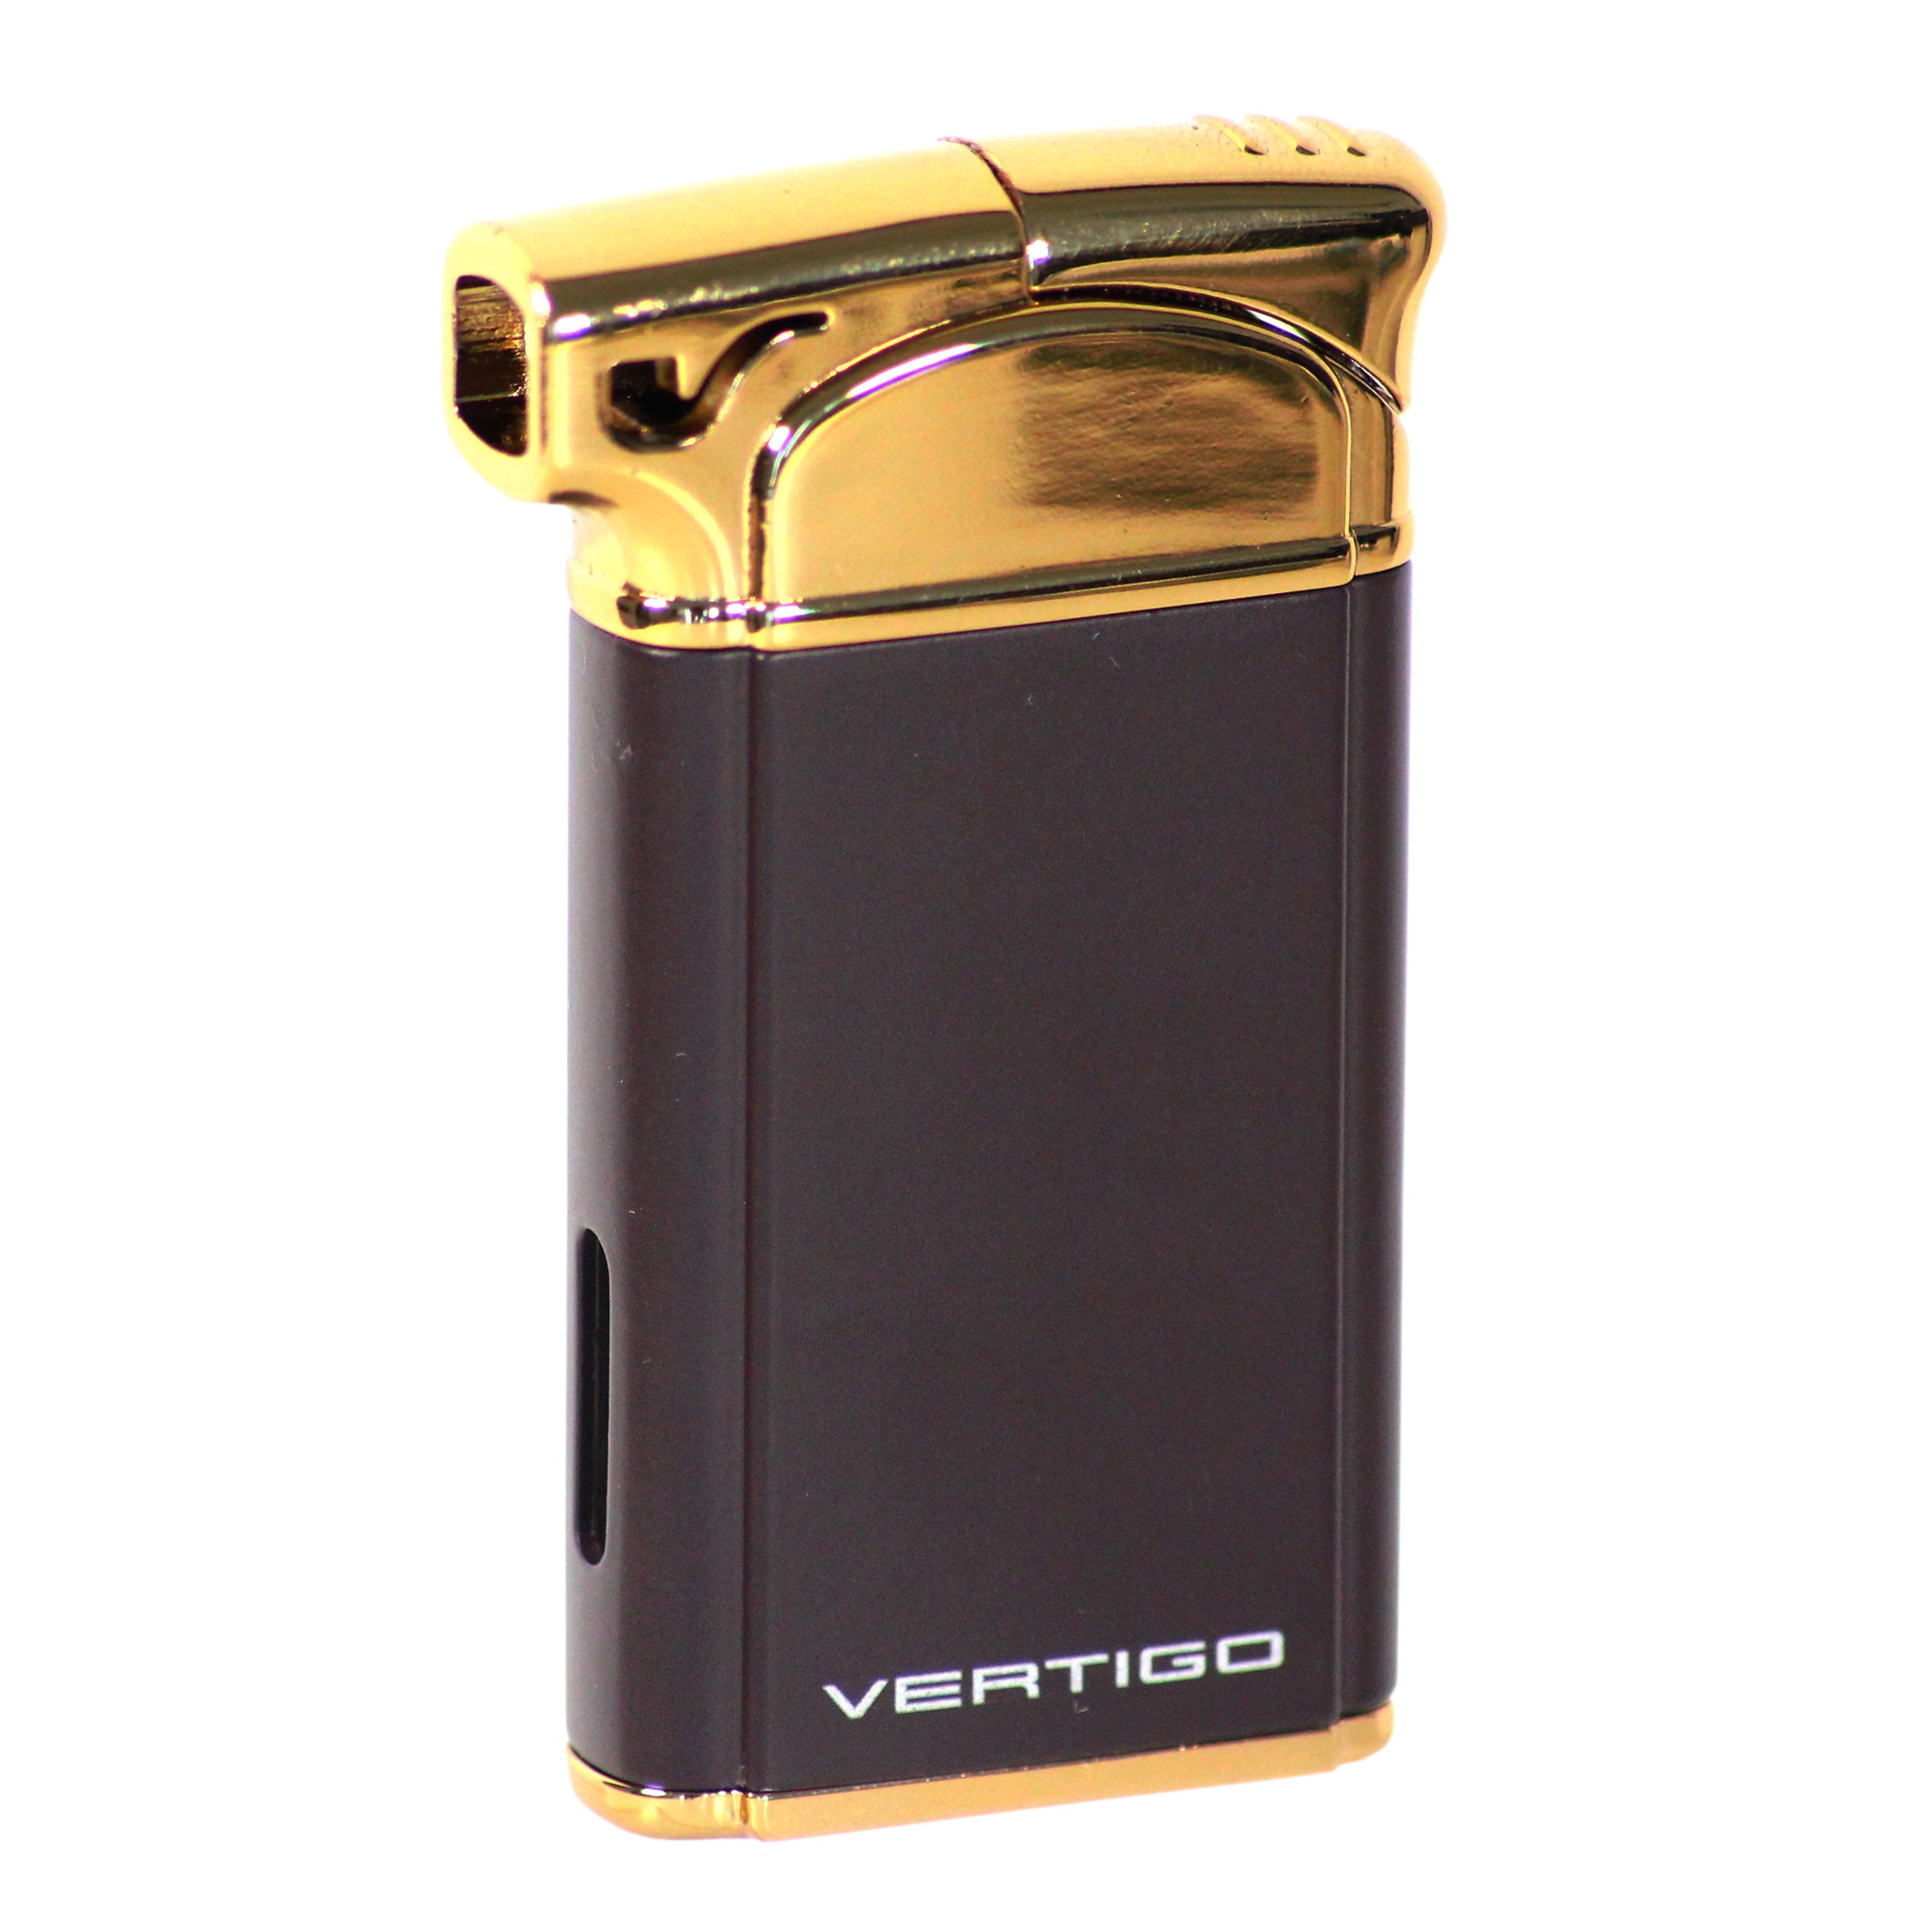 Vertigo Crosby Pipe Lighter